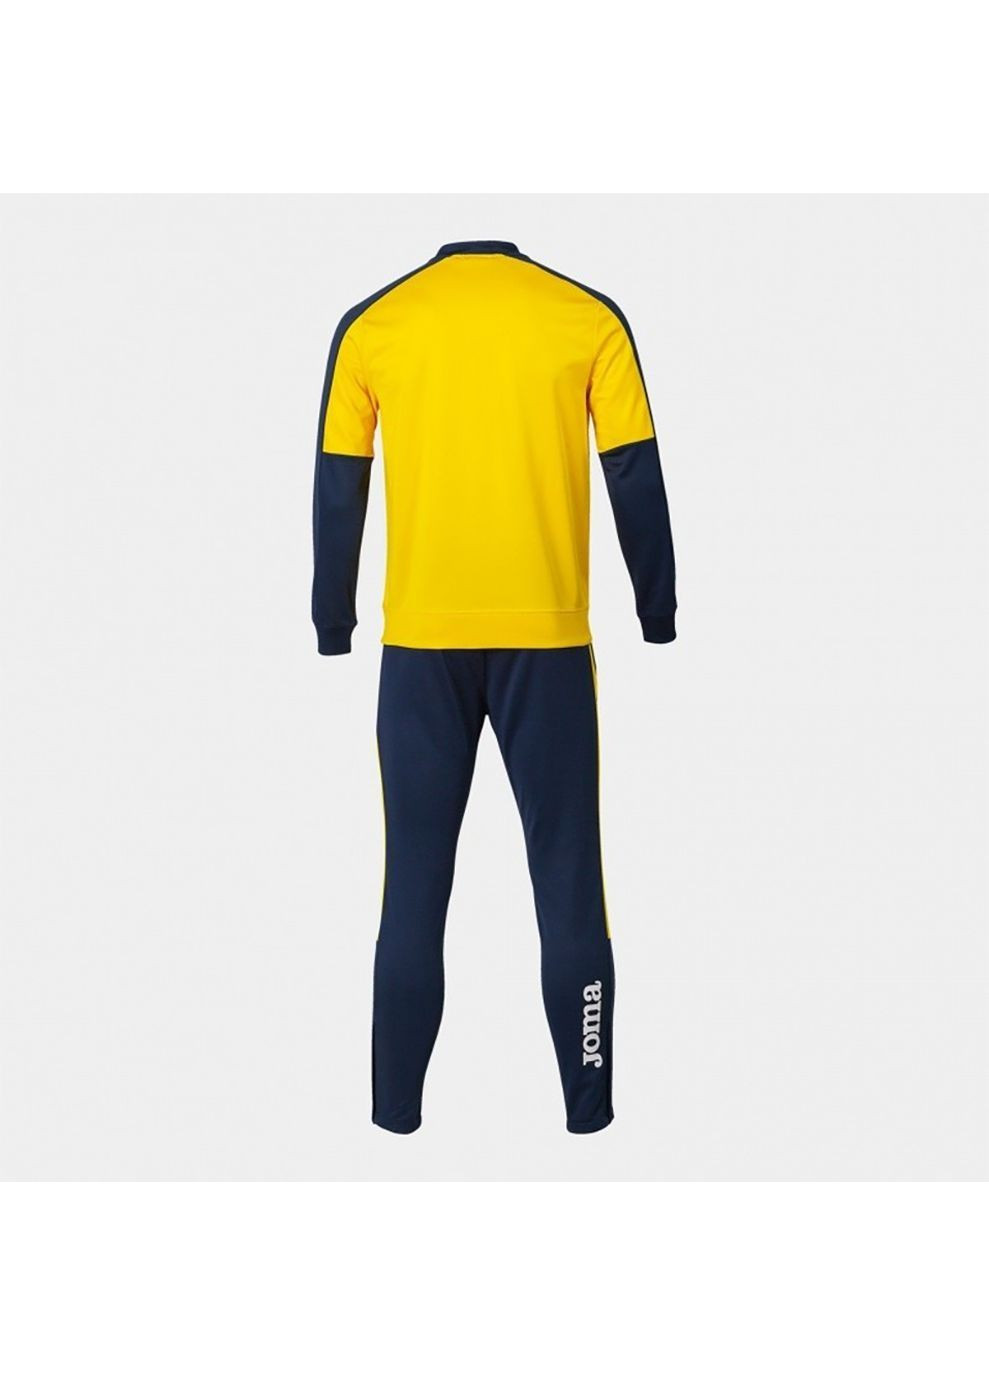 Спортивный костюм ECO CHAMPION желтый,синий Joma (282616121)